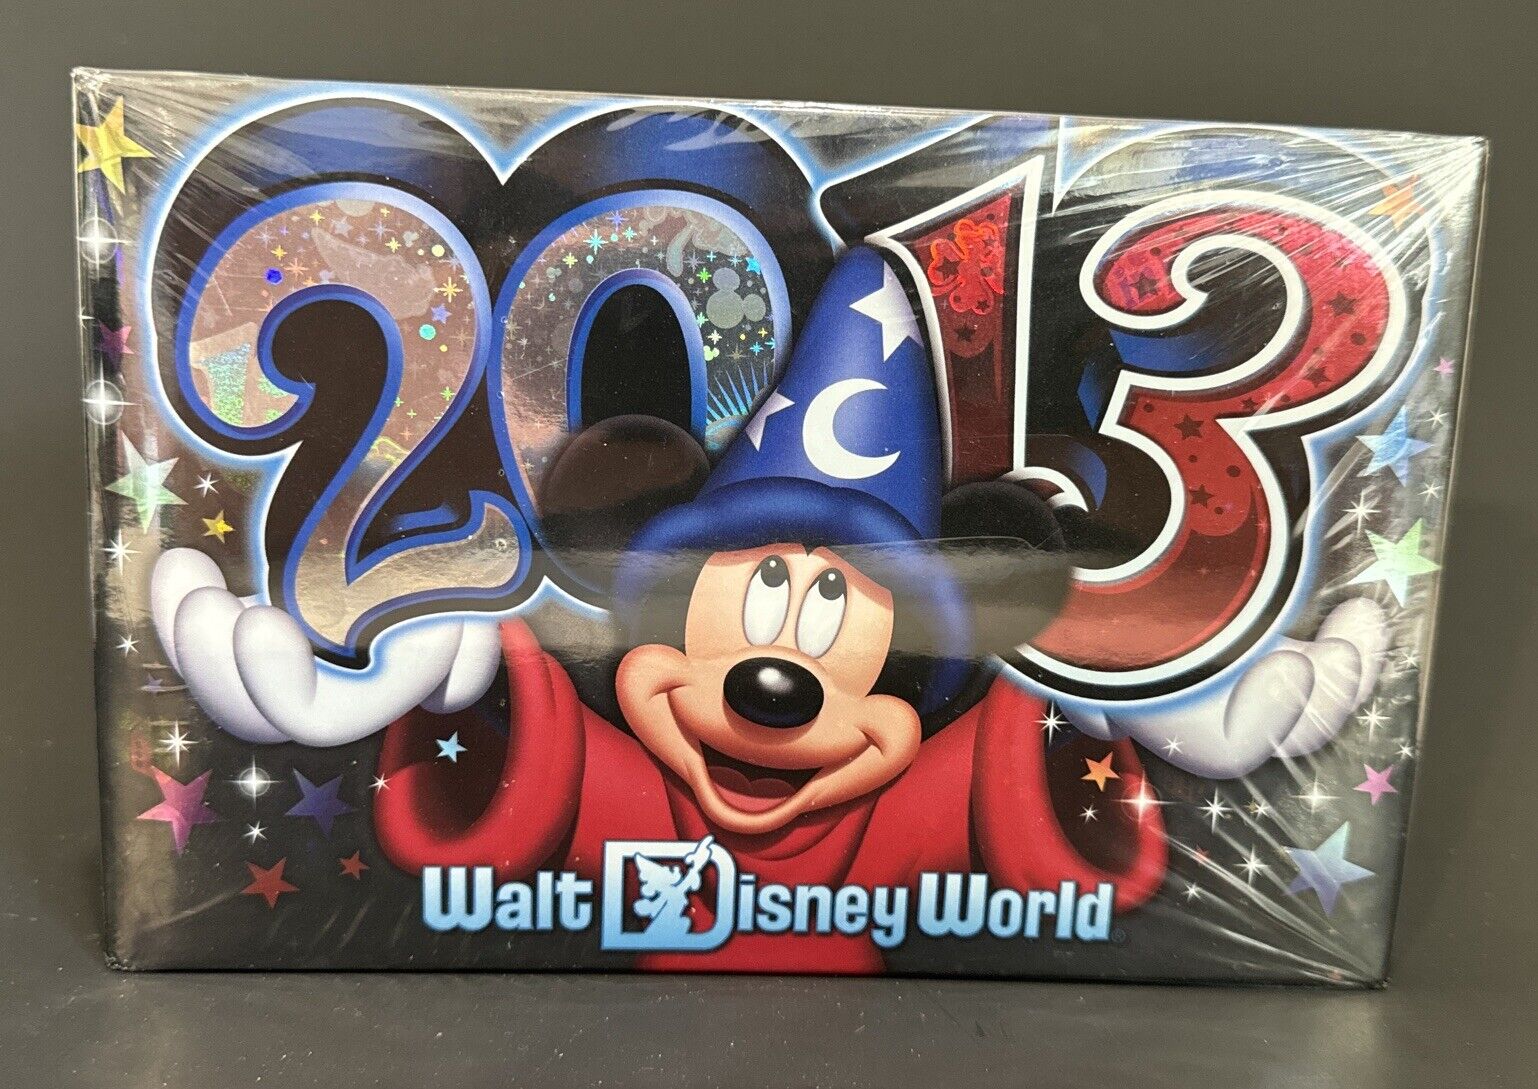 2013 Walt Disney World Featuring Sorcerer Mickey Photo Album